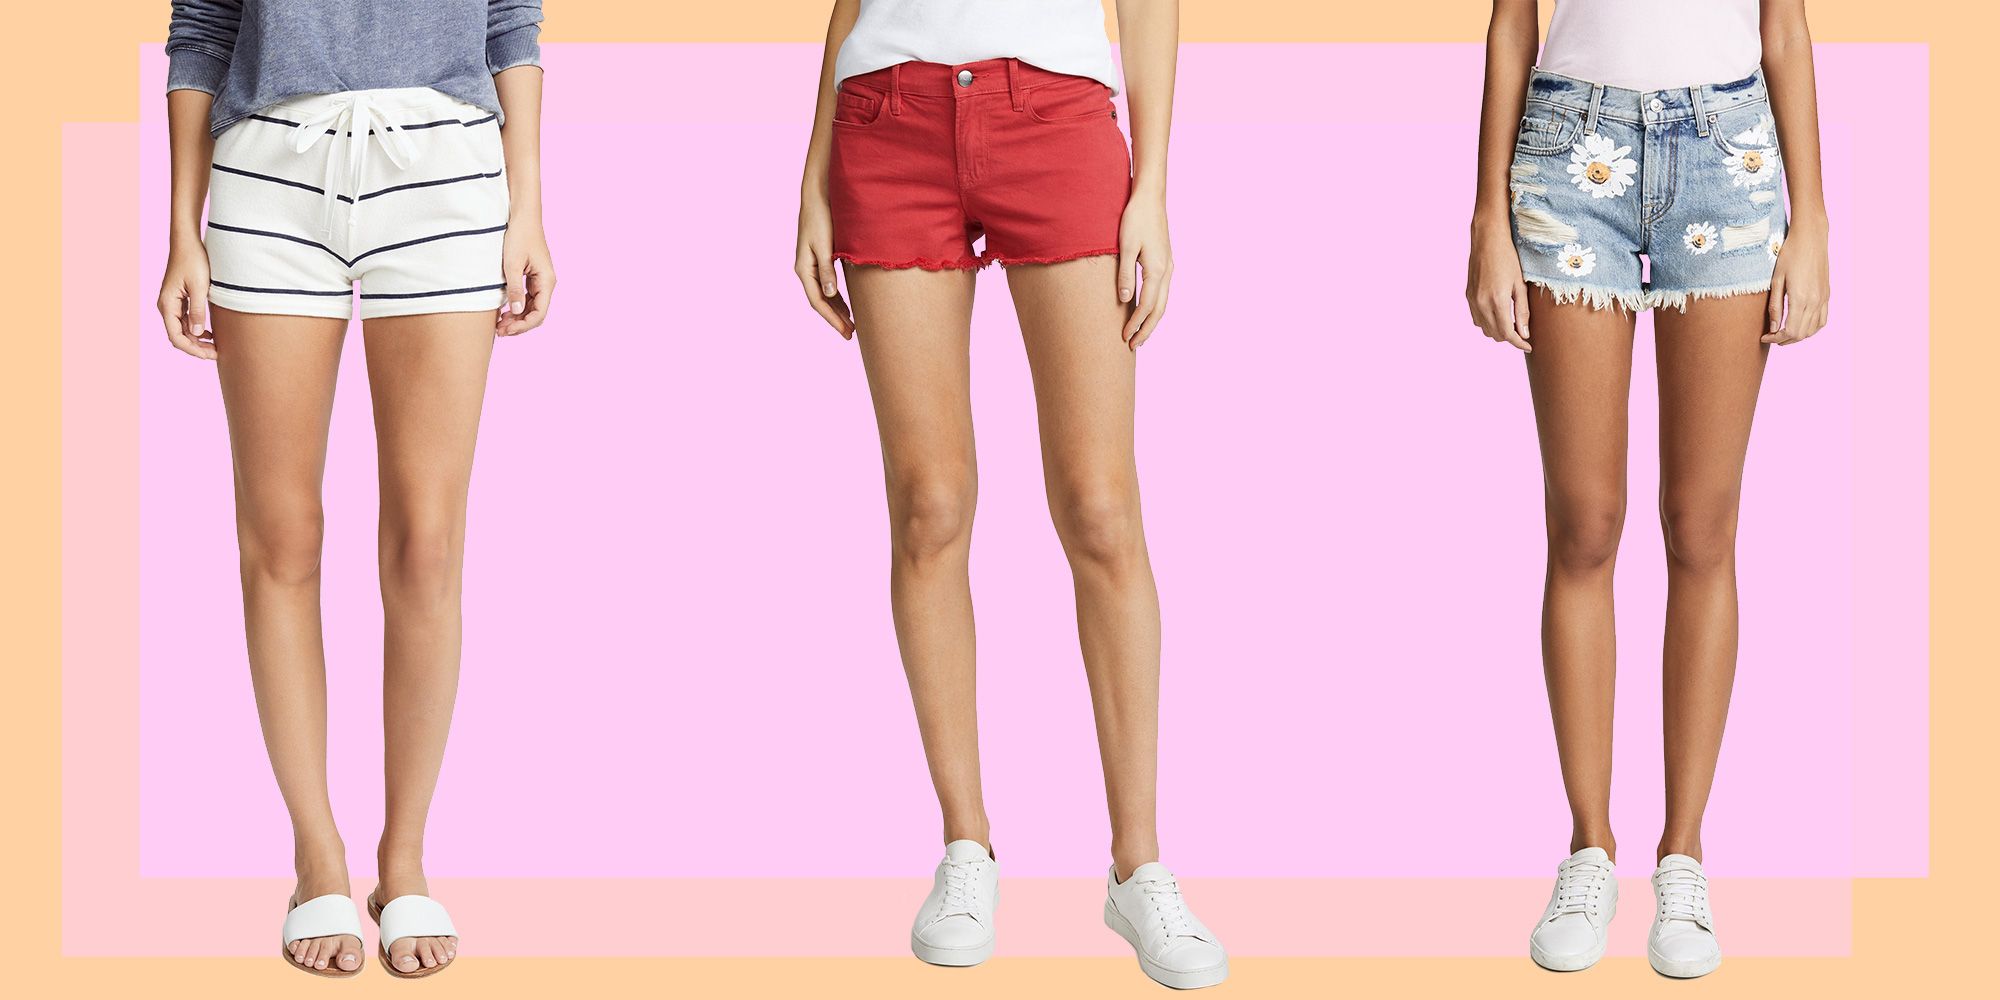 10 Best Short Shorts - Best Hot Pants for Summer